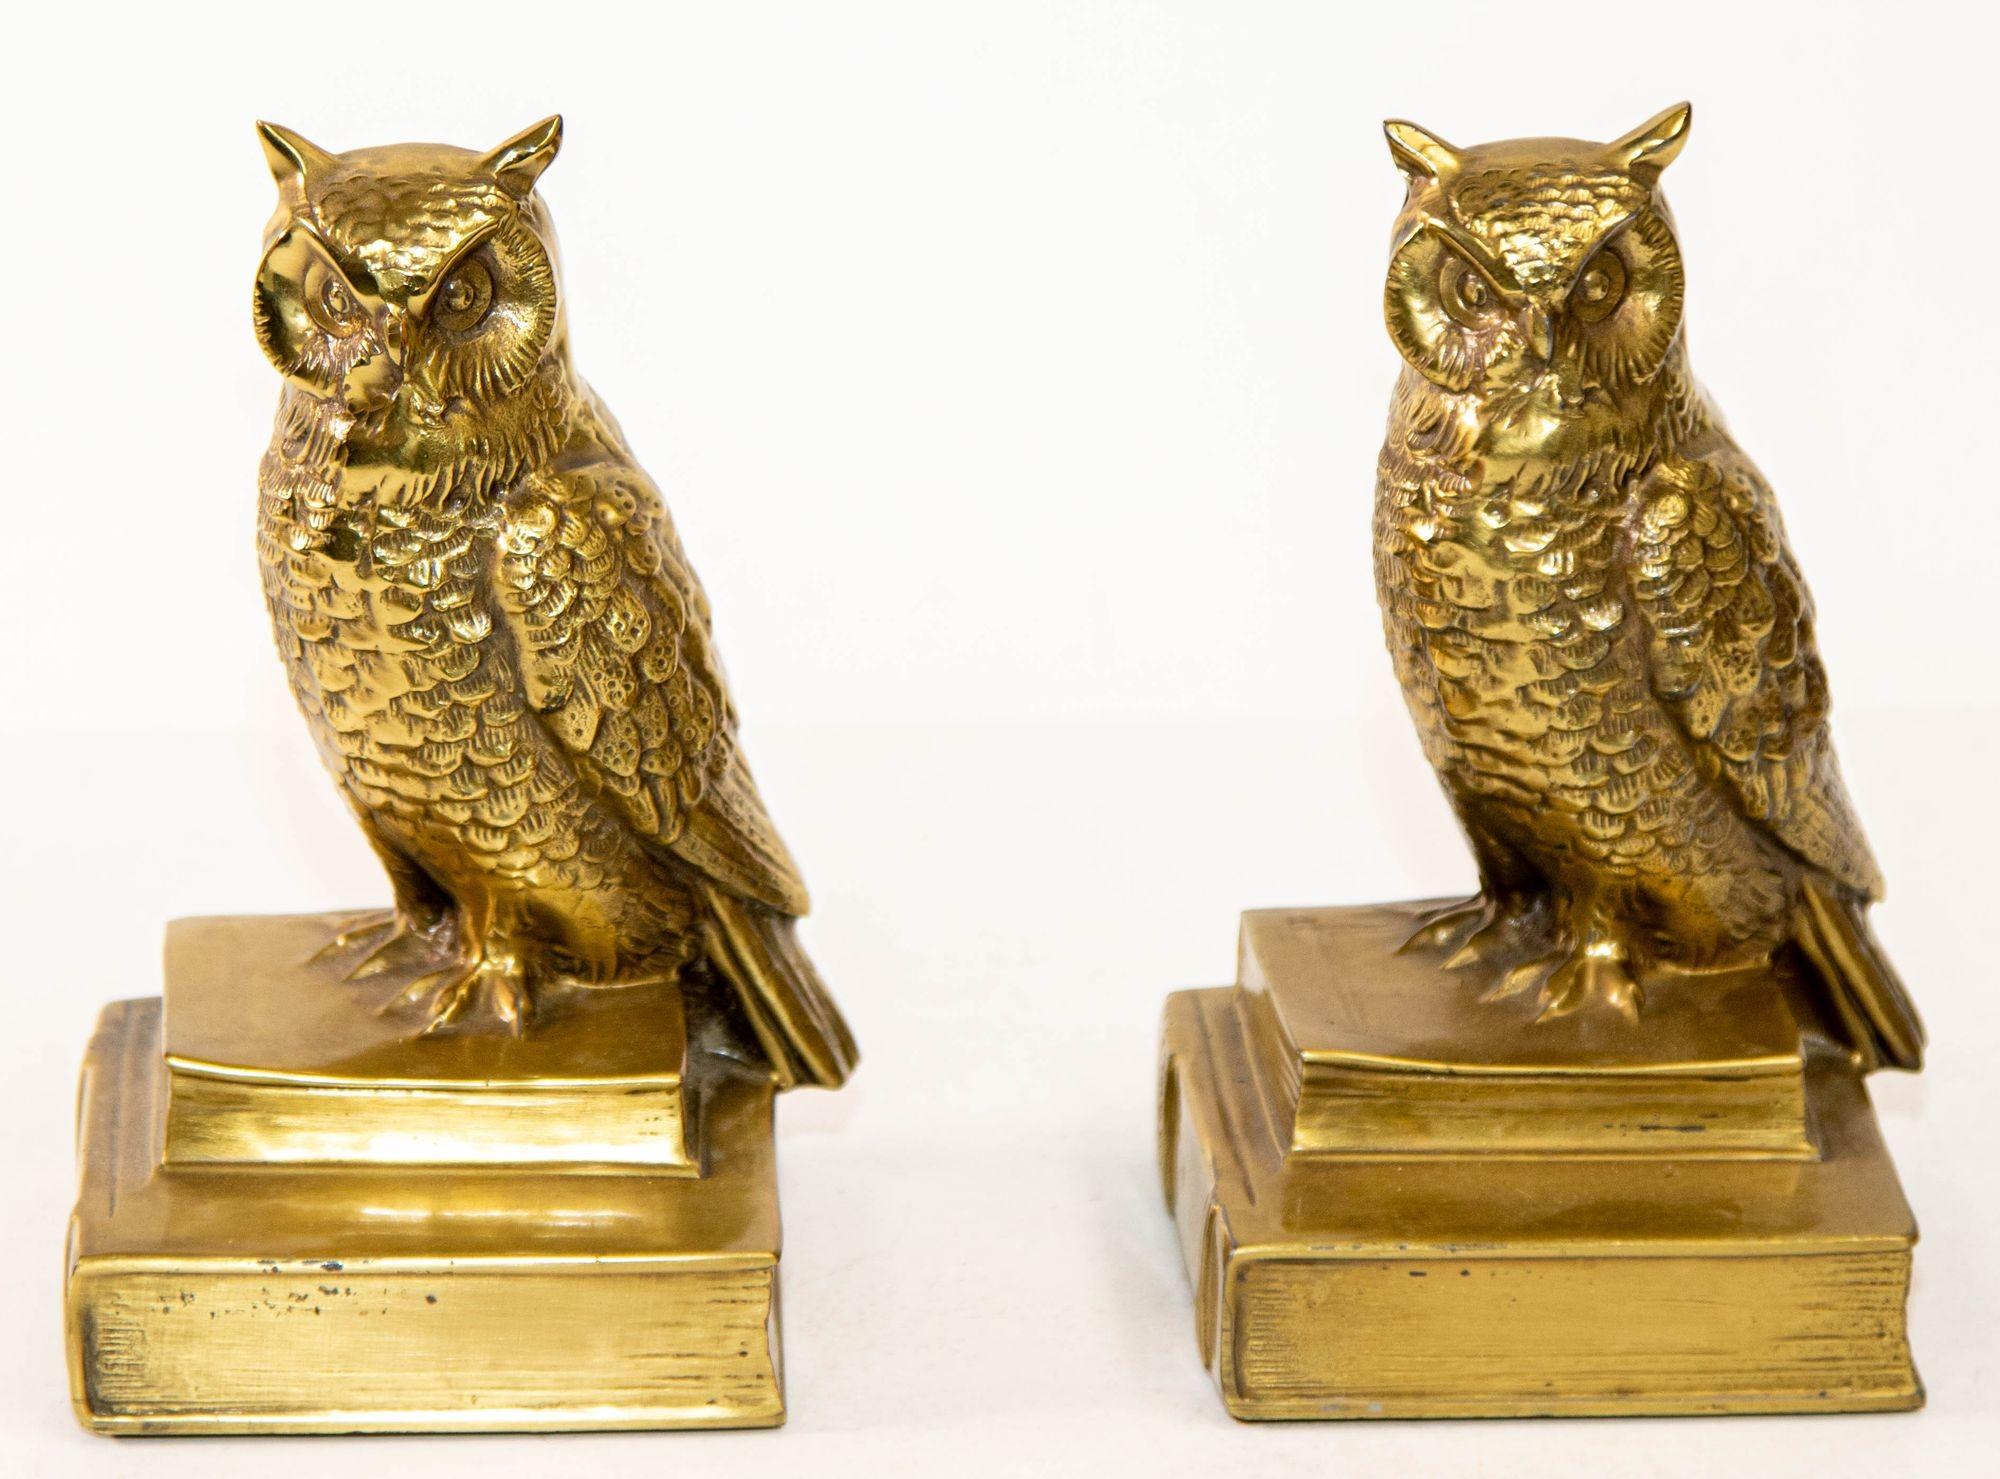 Vintage Cast Brass Owl Figurine Sculpture Bookends Mid-Century Modern 1950s For Sale 5